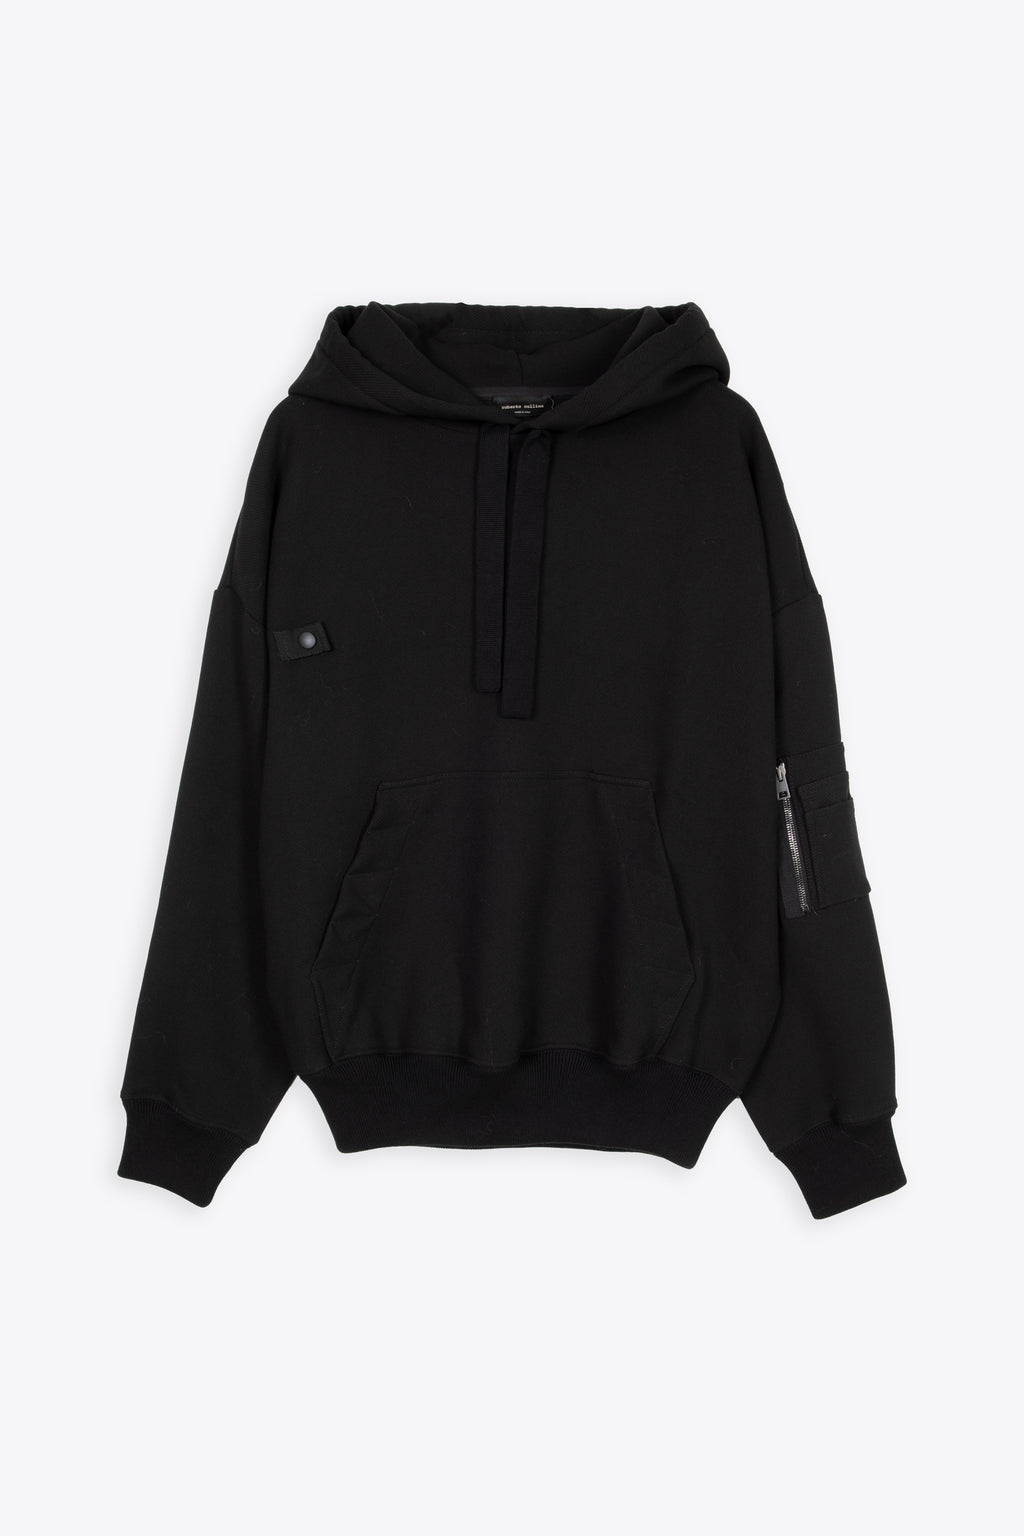 alt-image__Black-cotton-oversized-hoodie